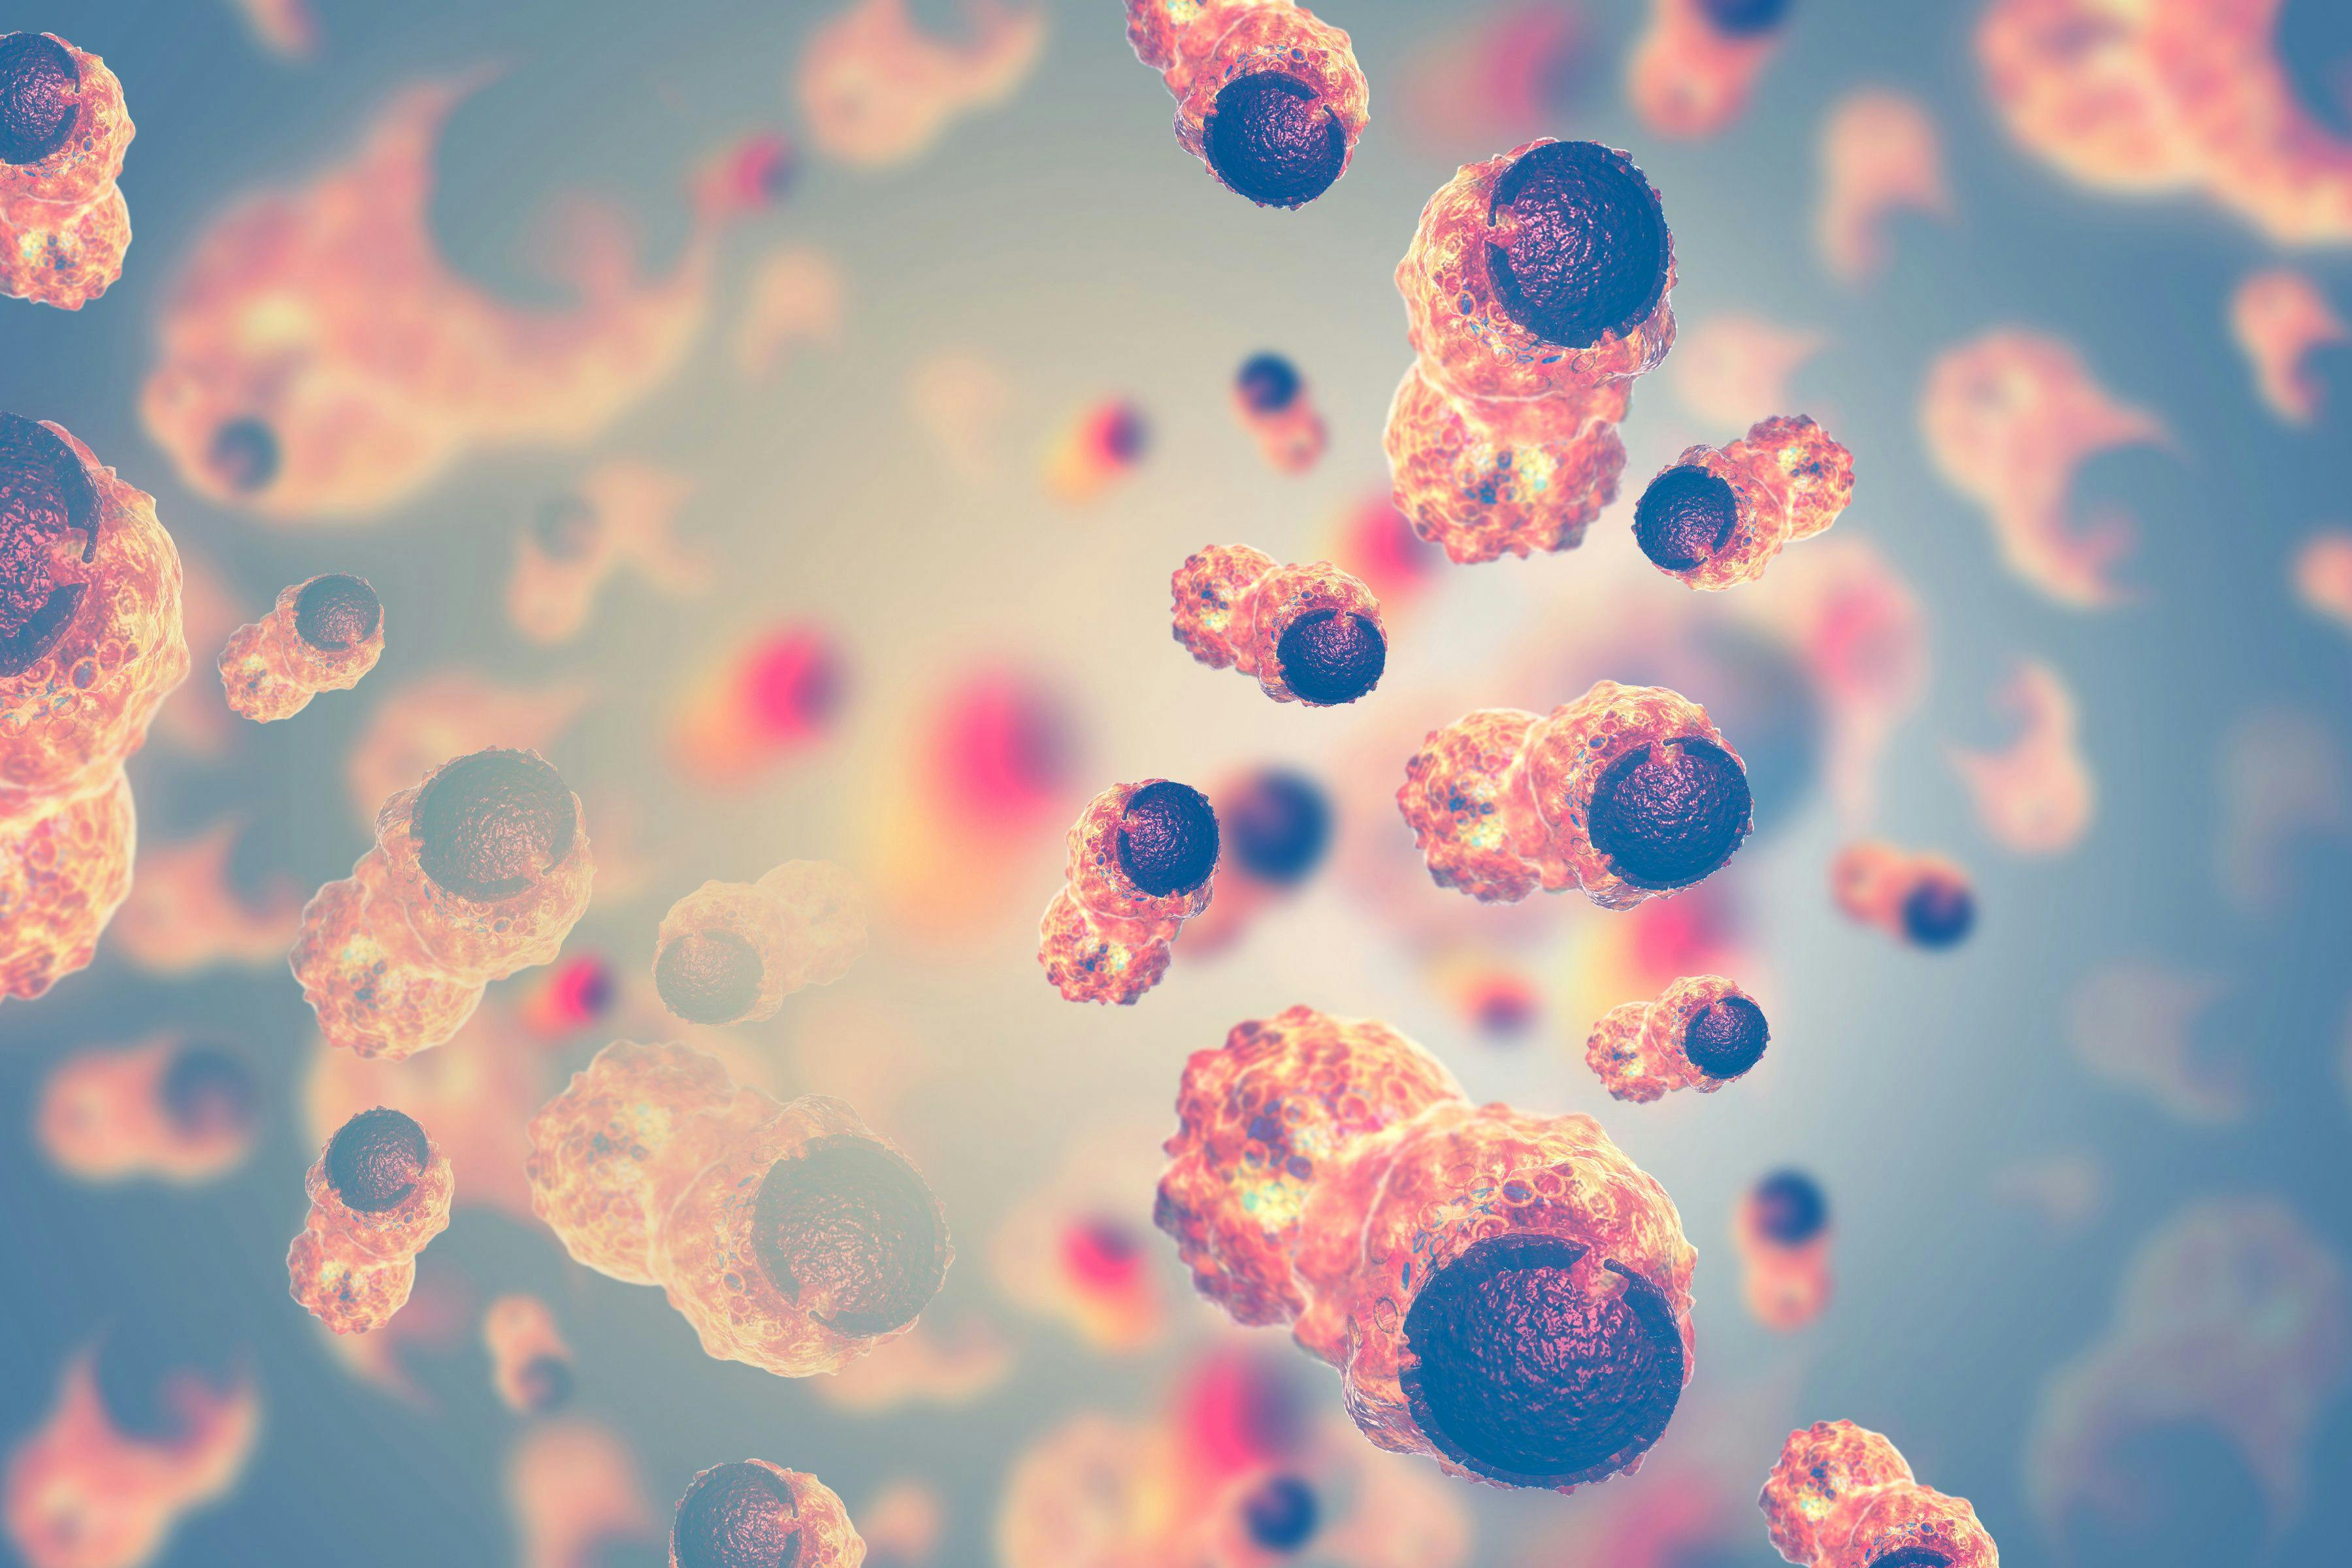 Cancer cells | Image Credit: © Crystal light - stock.adobe.com